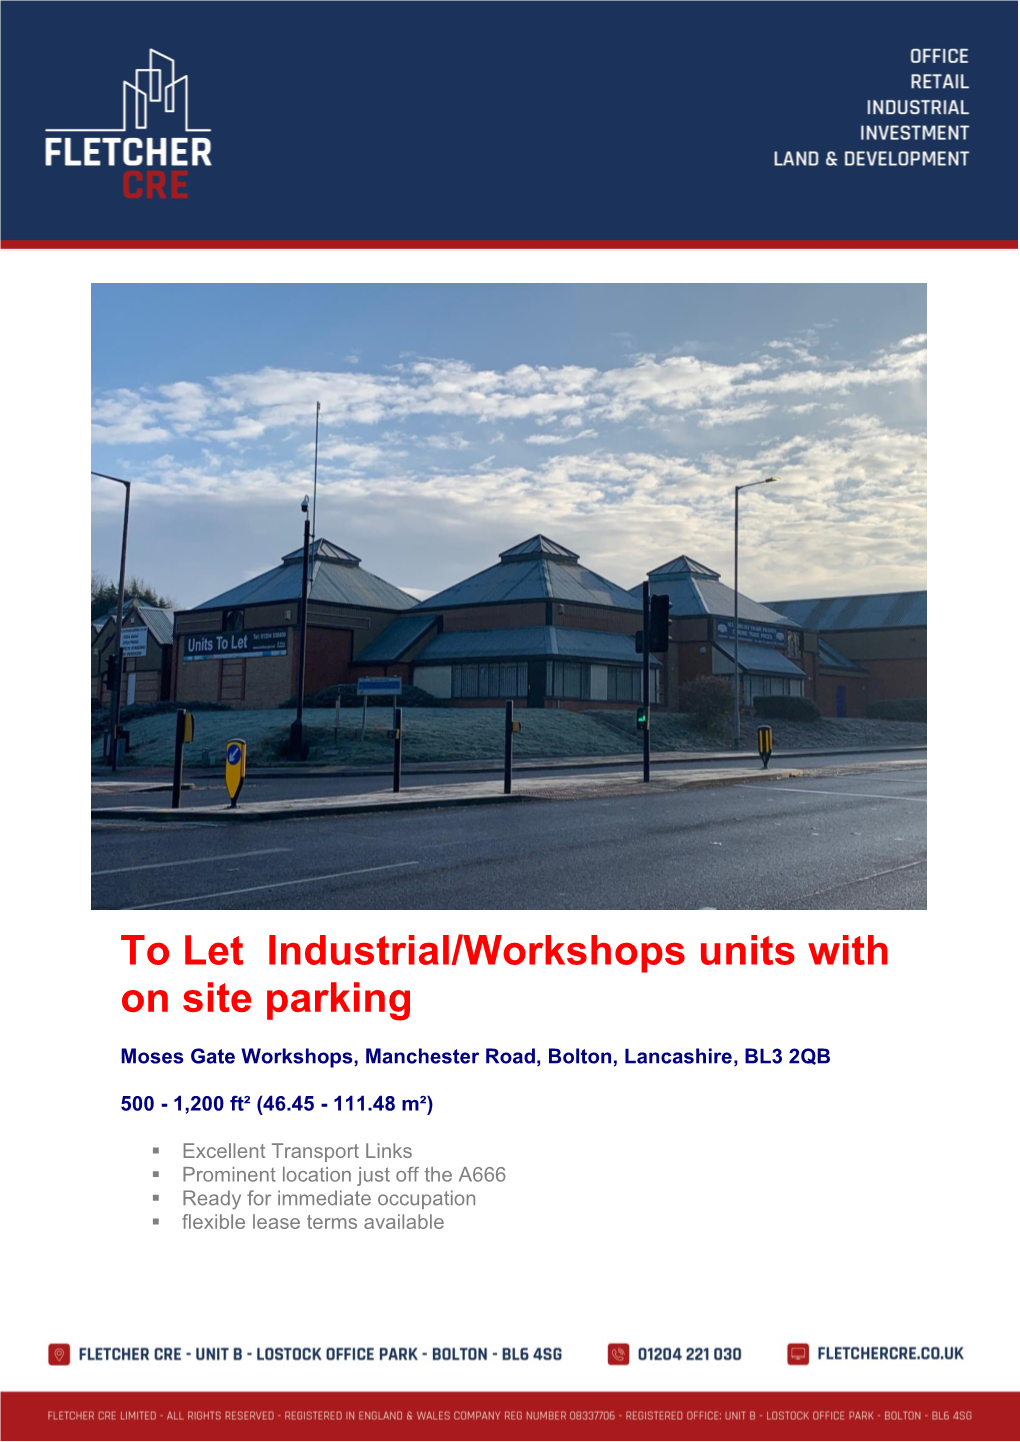 Moses Gate Workshops, Manchester Road, Bolton, Lancashire, BL3 2QB